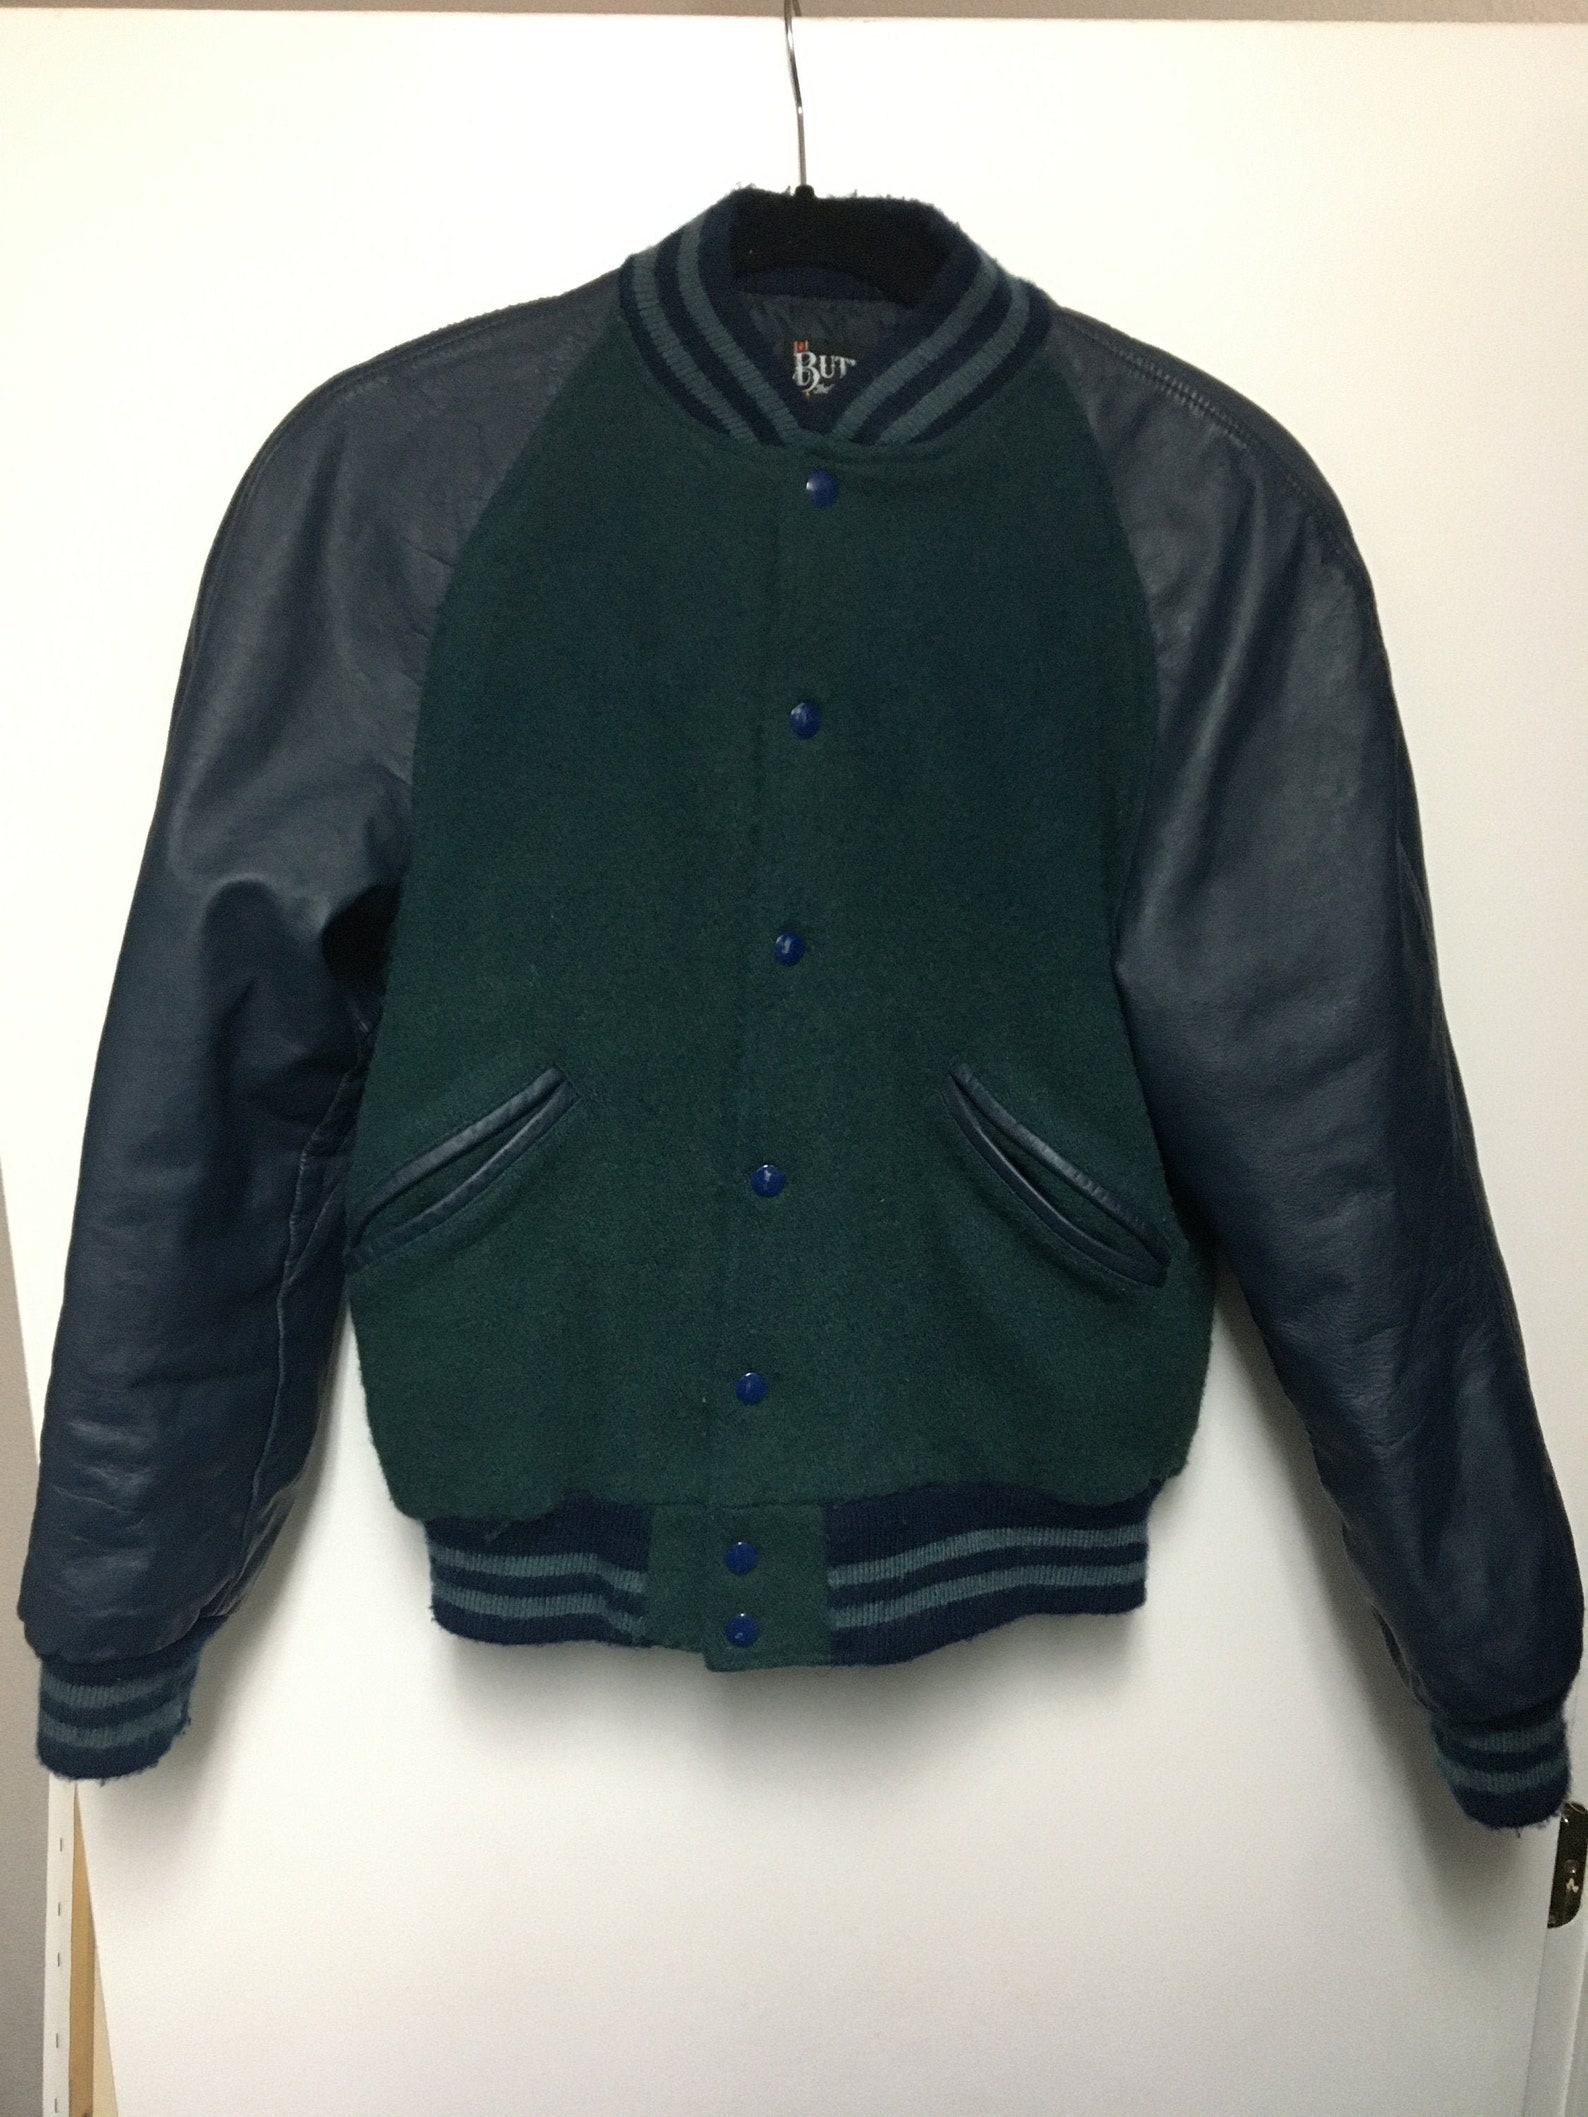 Vintage men's 1950s Butwin varsity jacket | Etsy